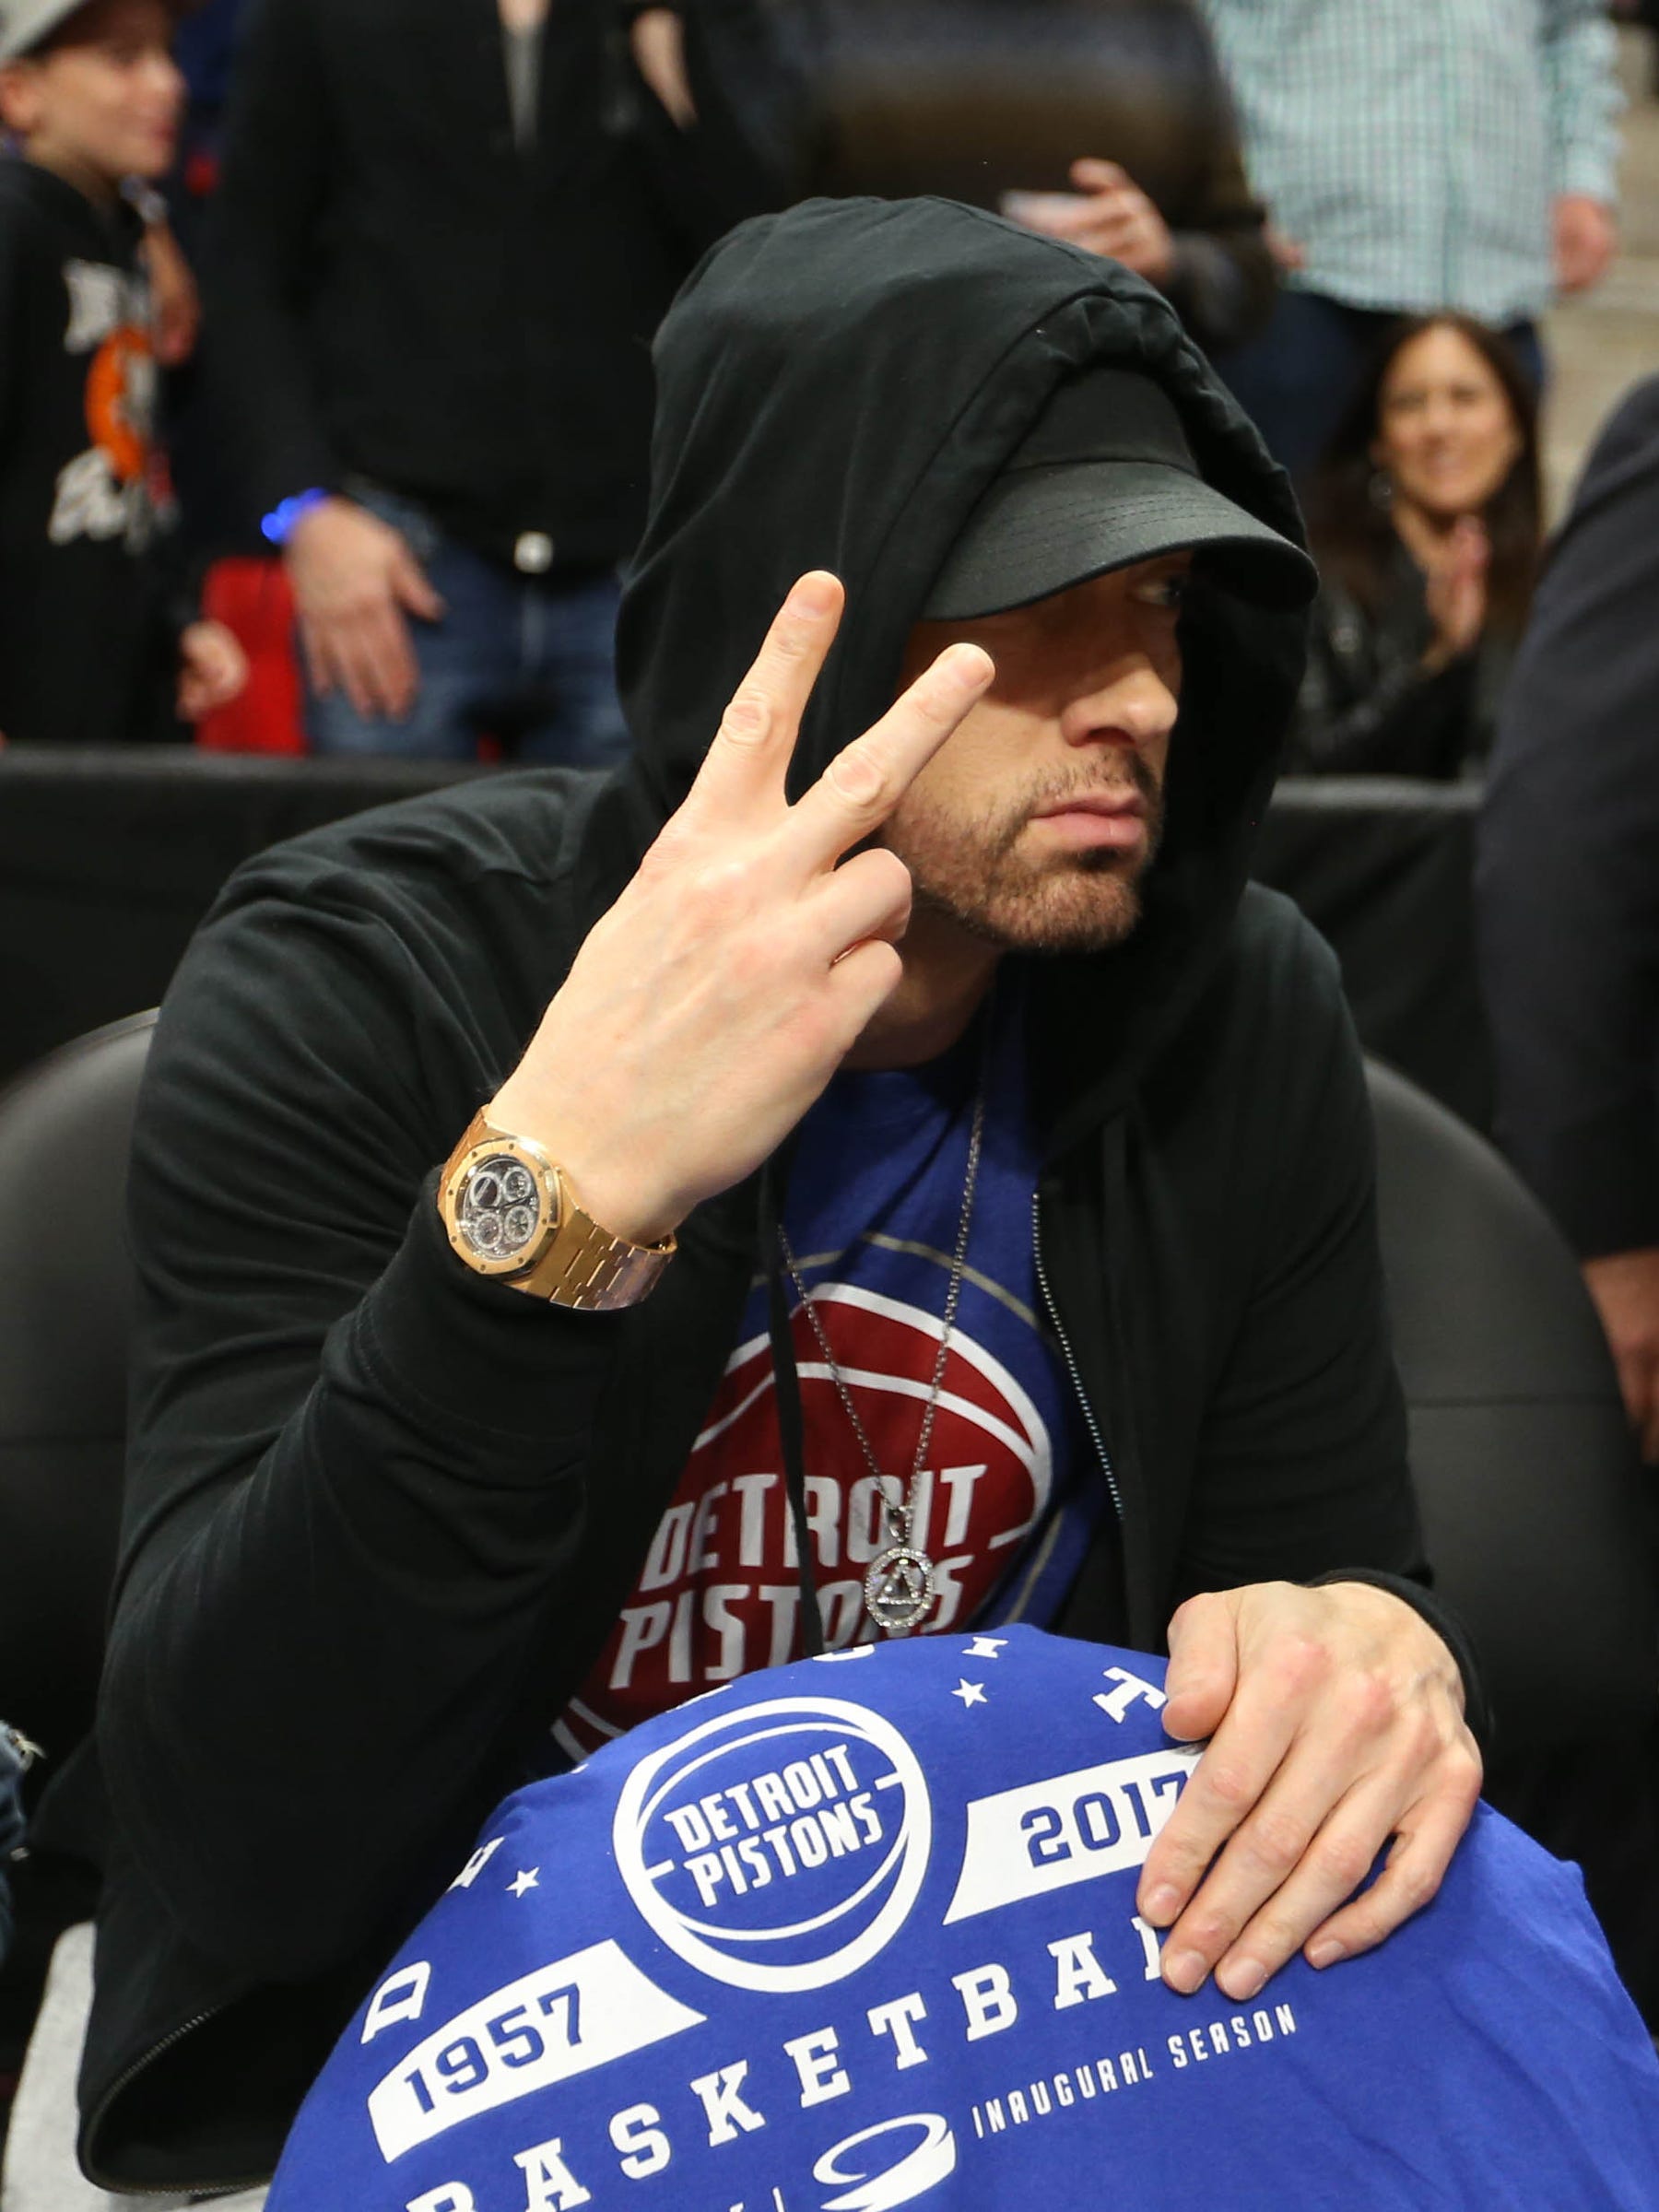 WickedWays on X: Eminem x Detroit Pistons Swingman Jersey Eminem